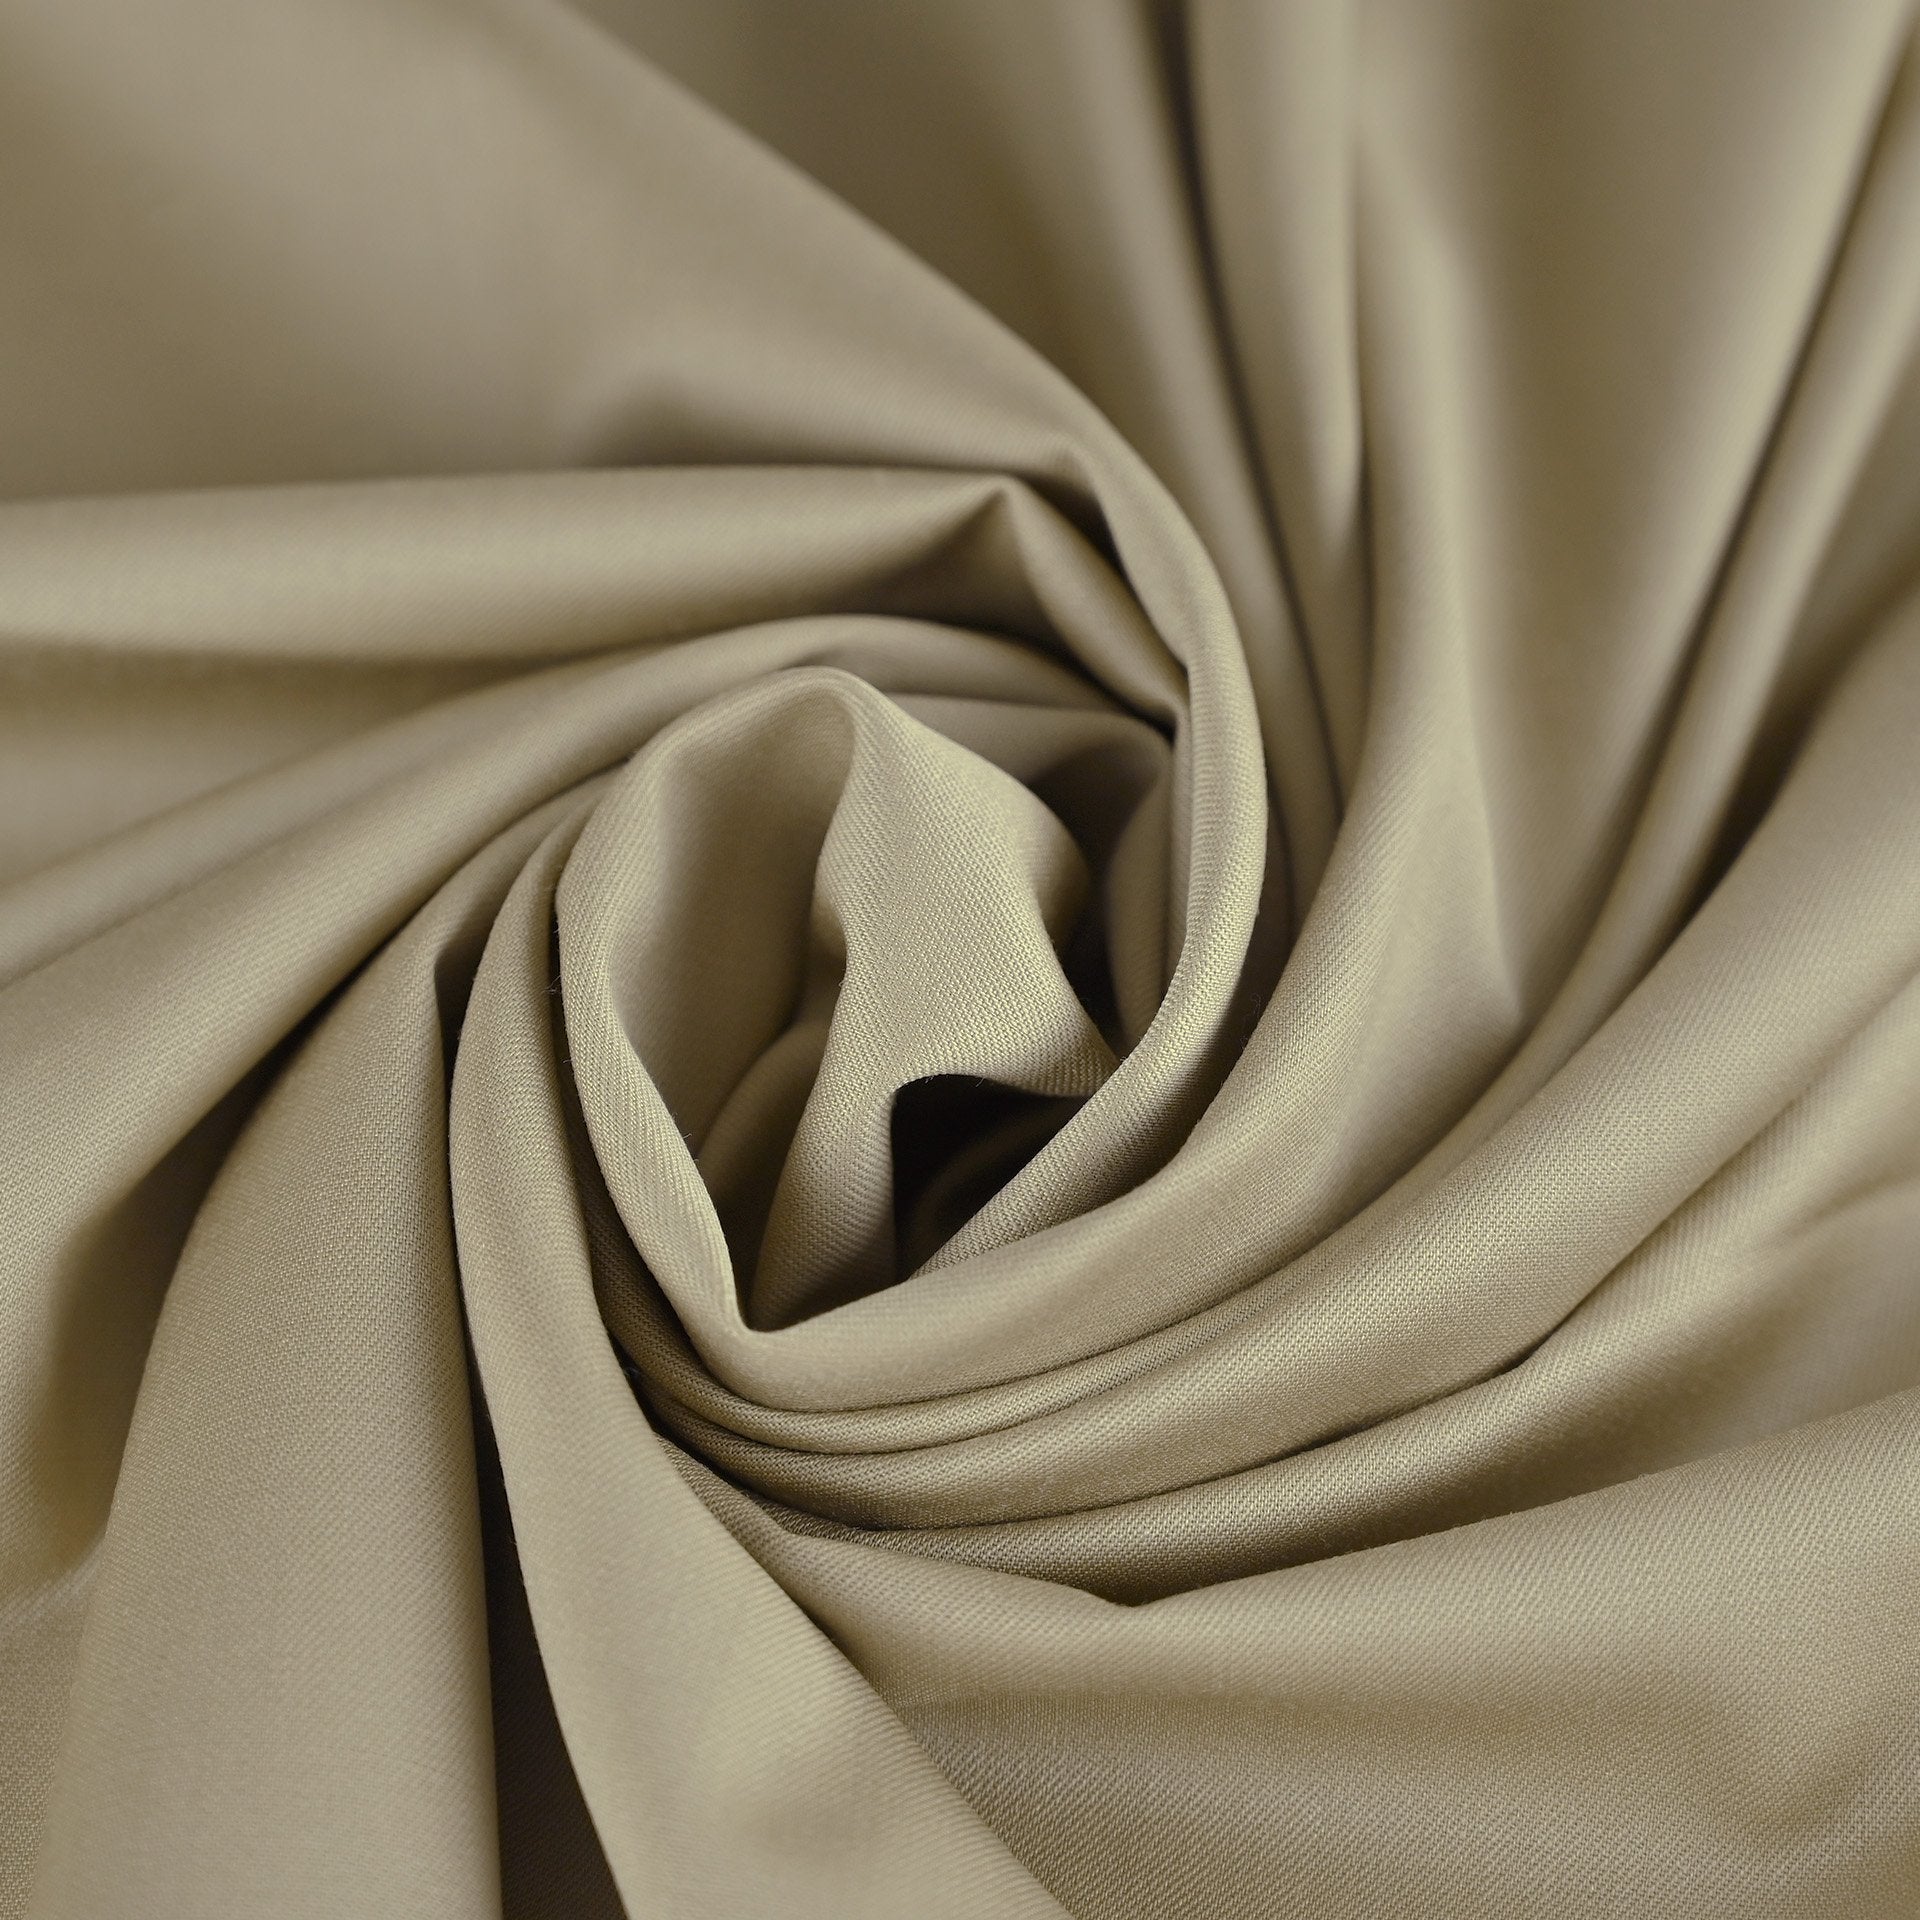 Khaki Beige Suiting Fabric 4749